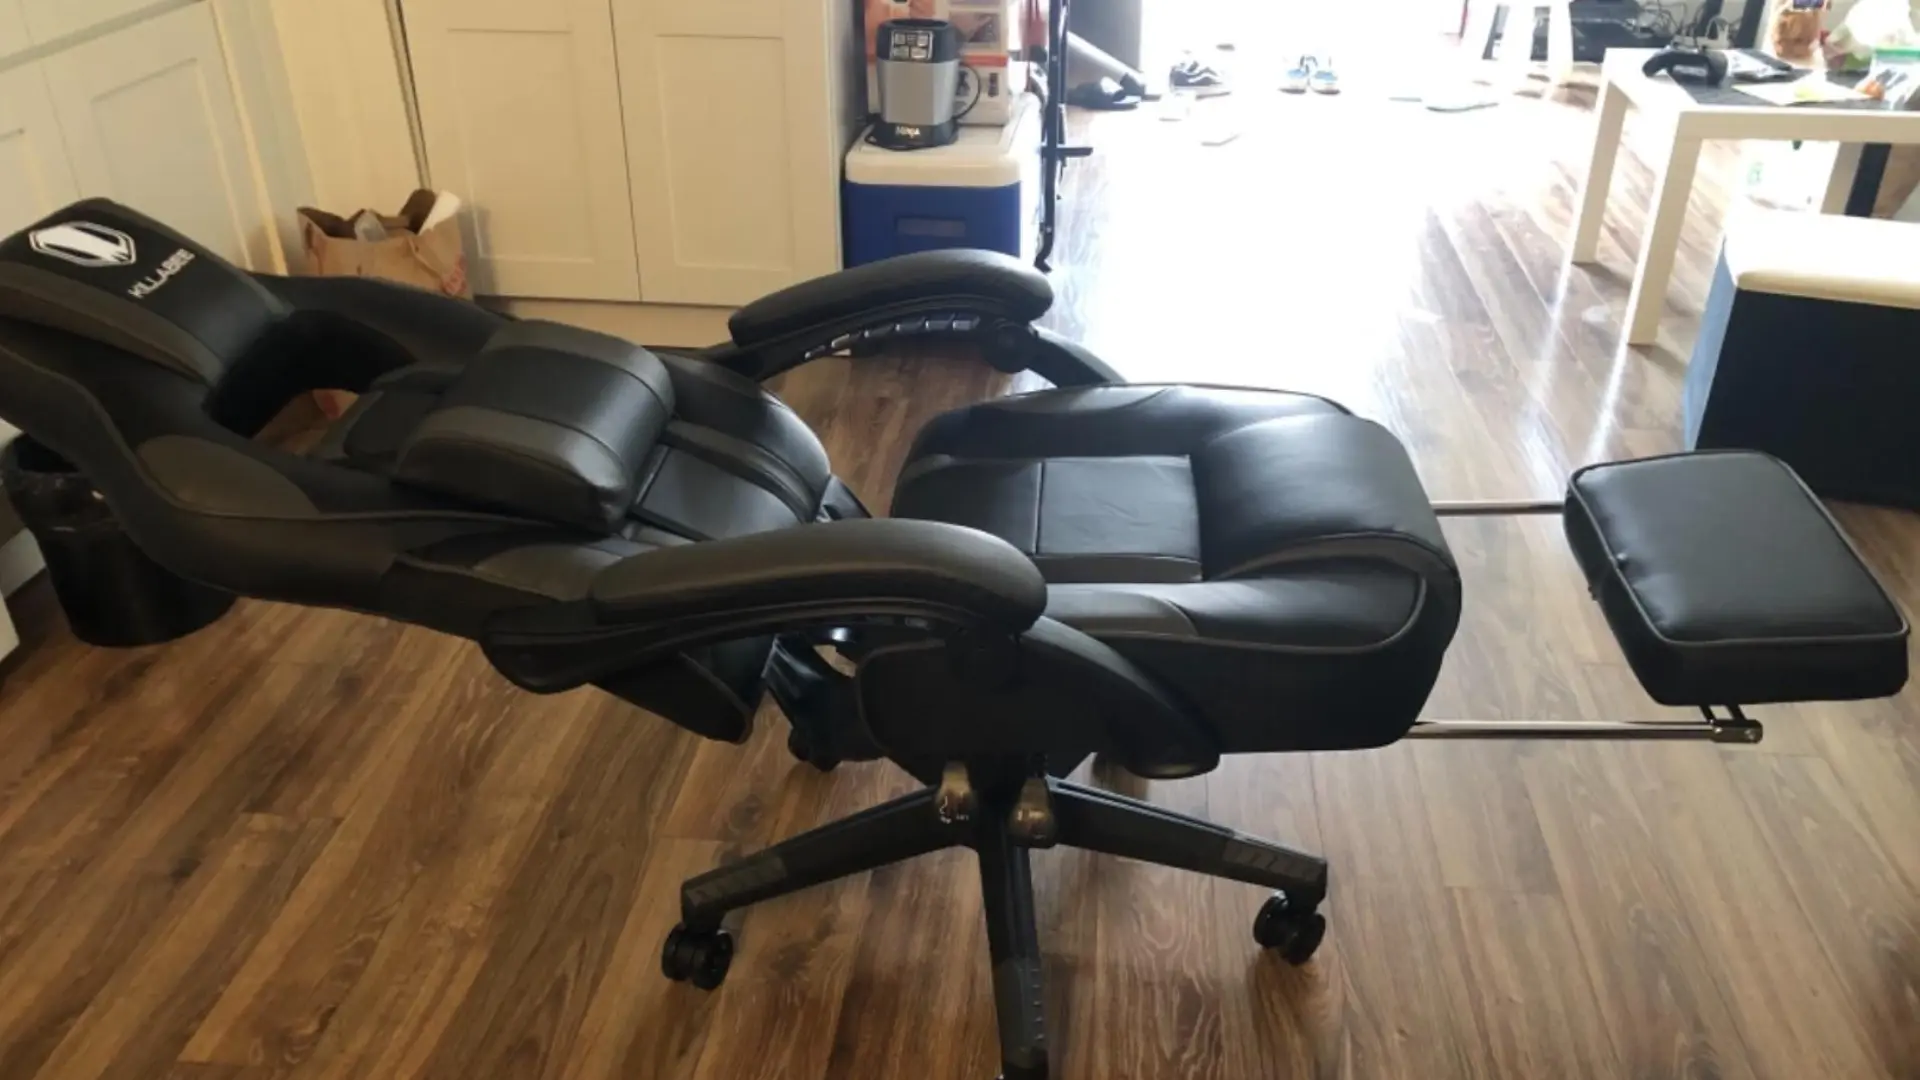 KILLABEE Massage Gaming Chair